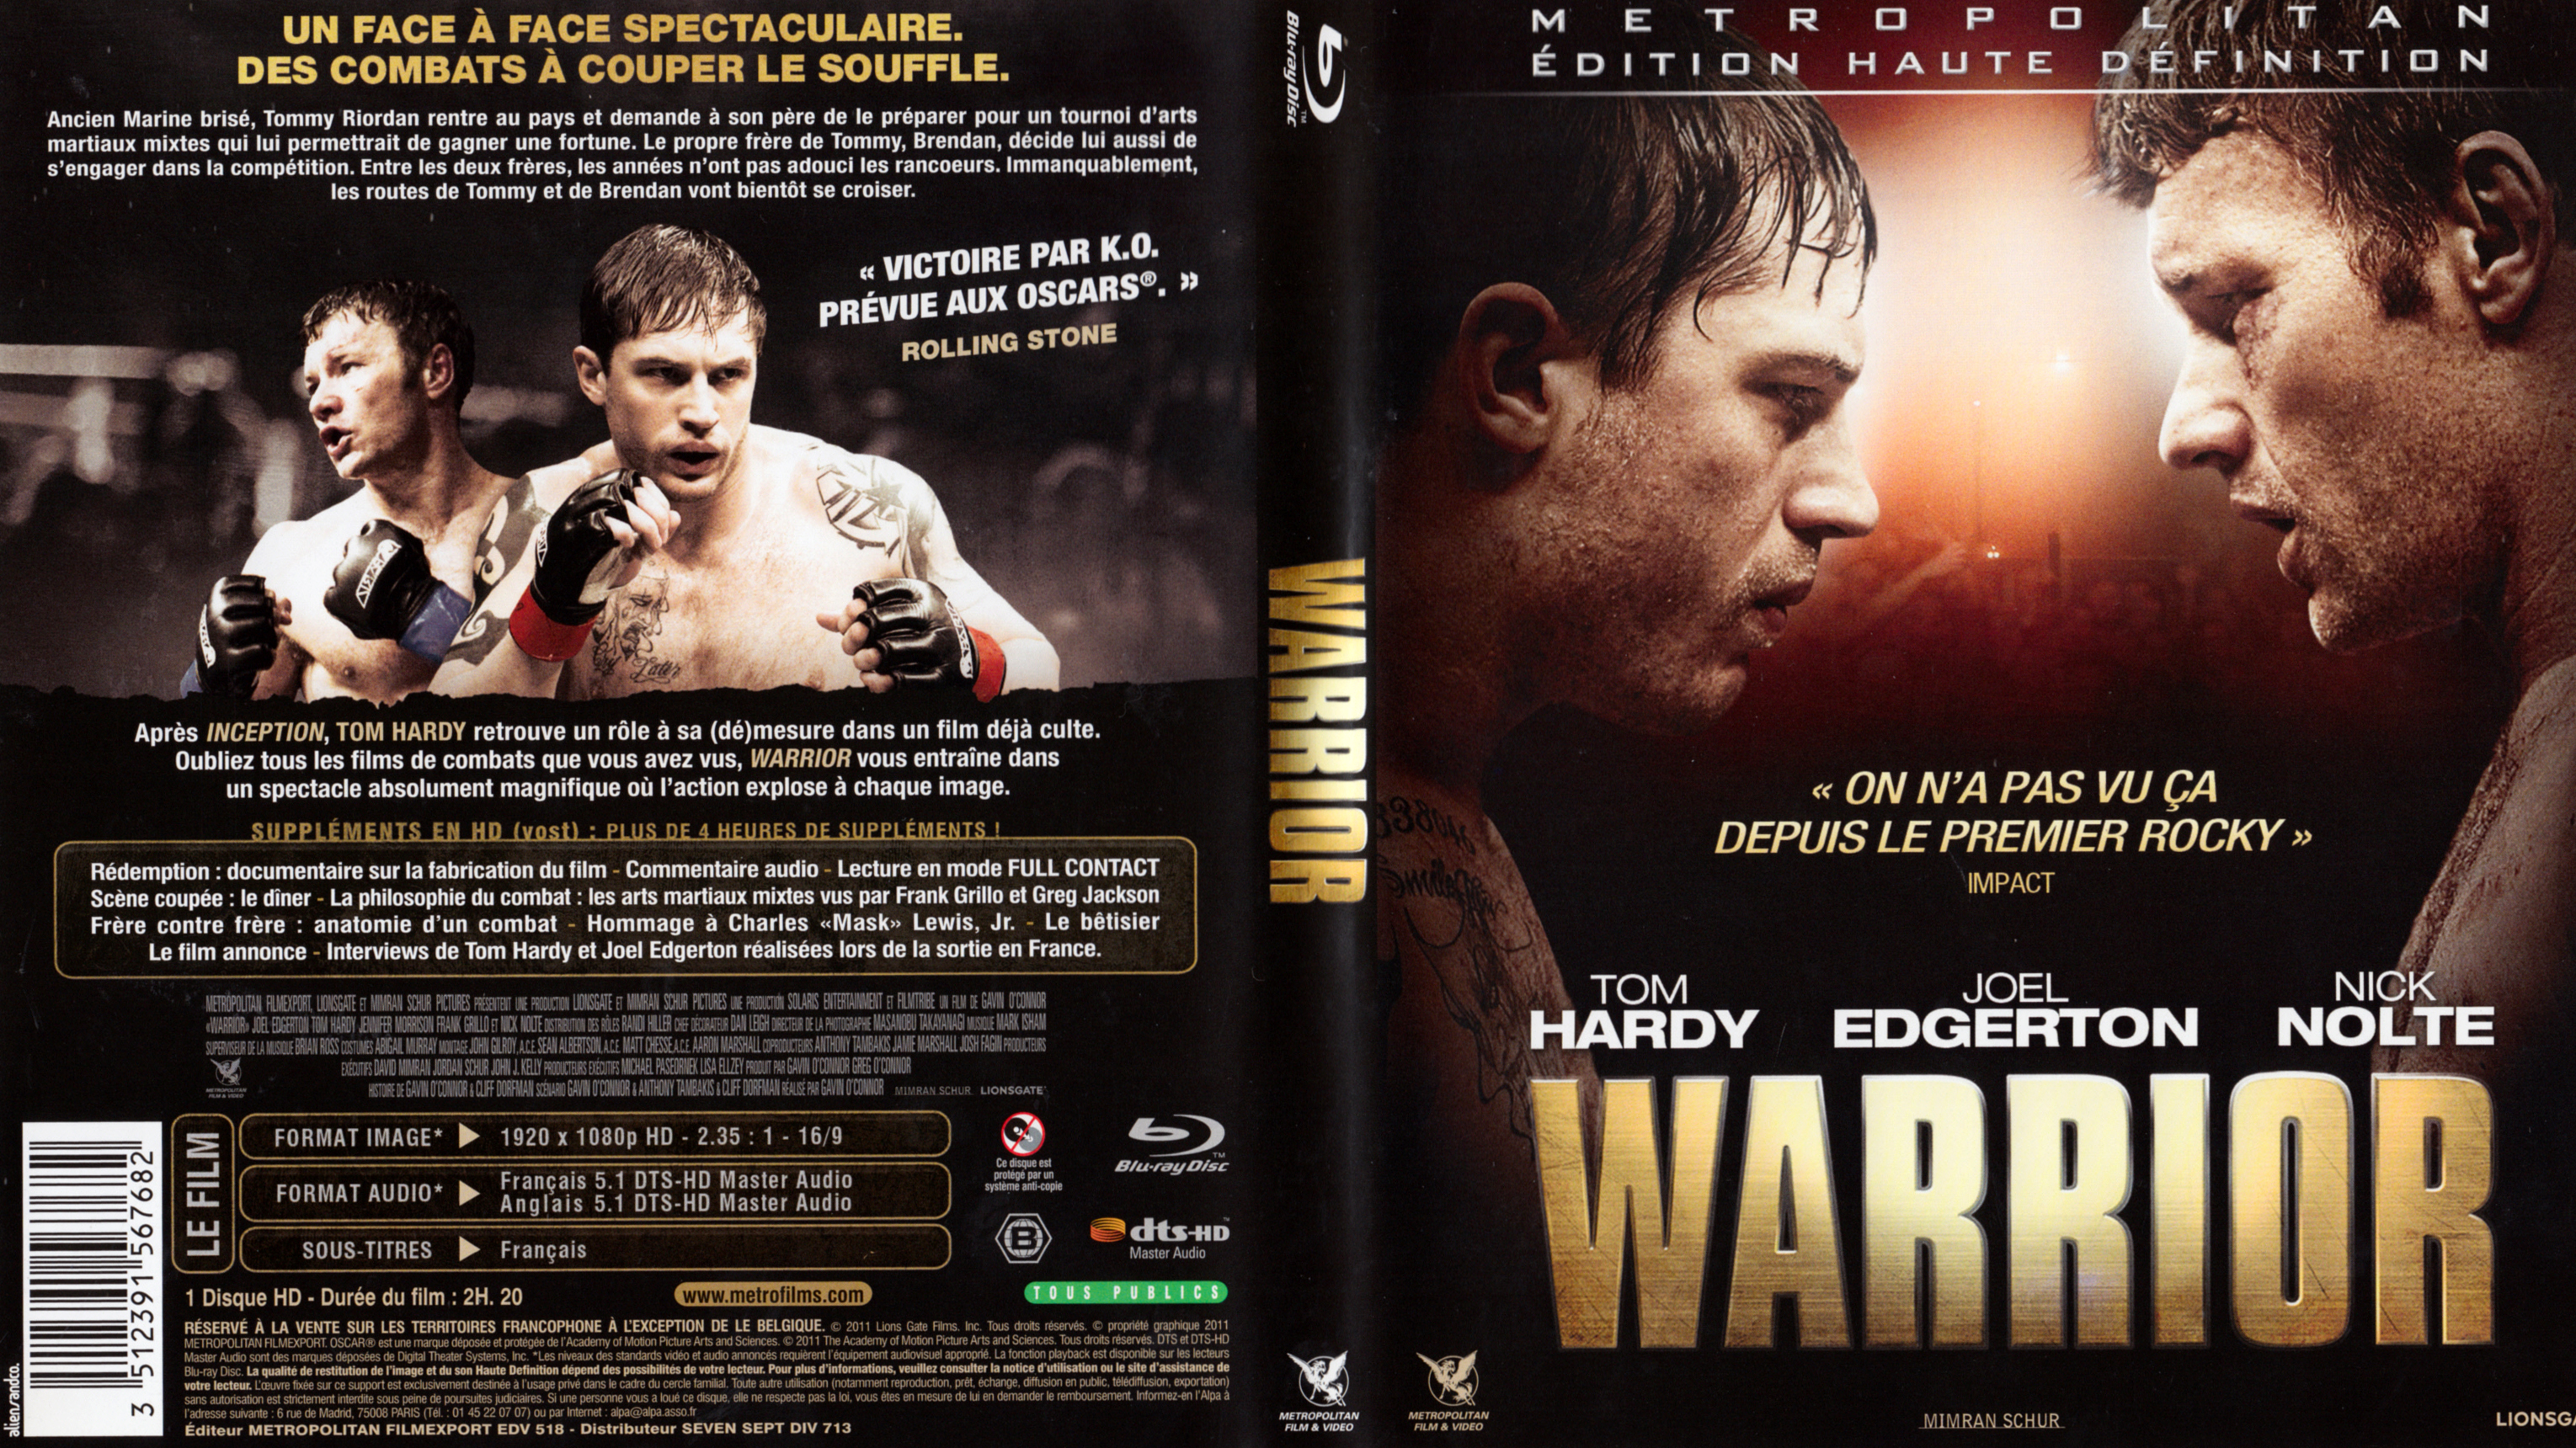 Jaquette DVD Warrior (BLU-RAY) v2